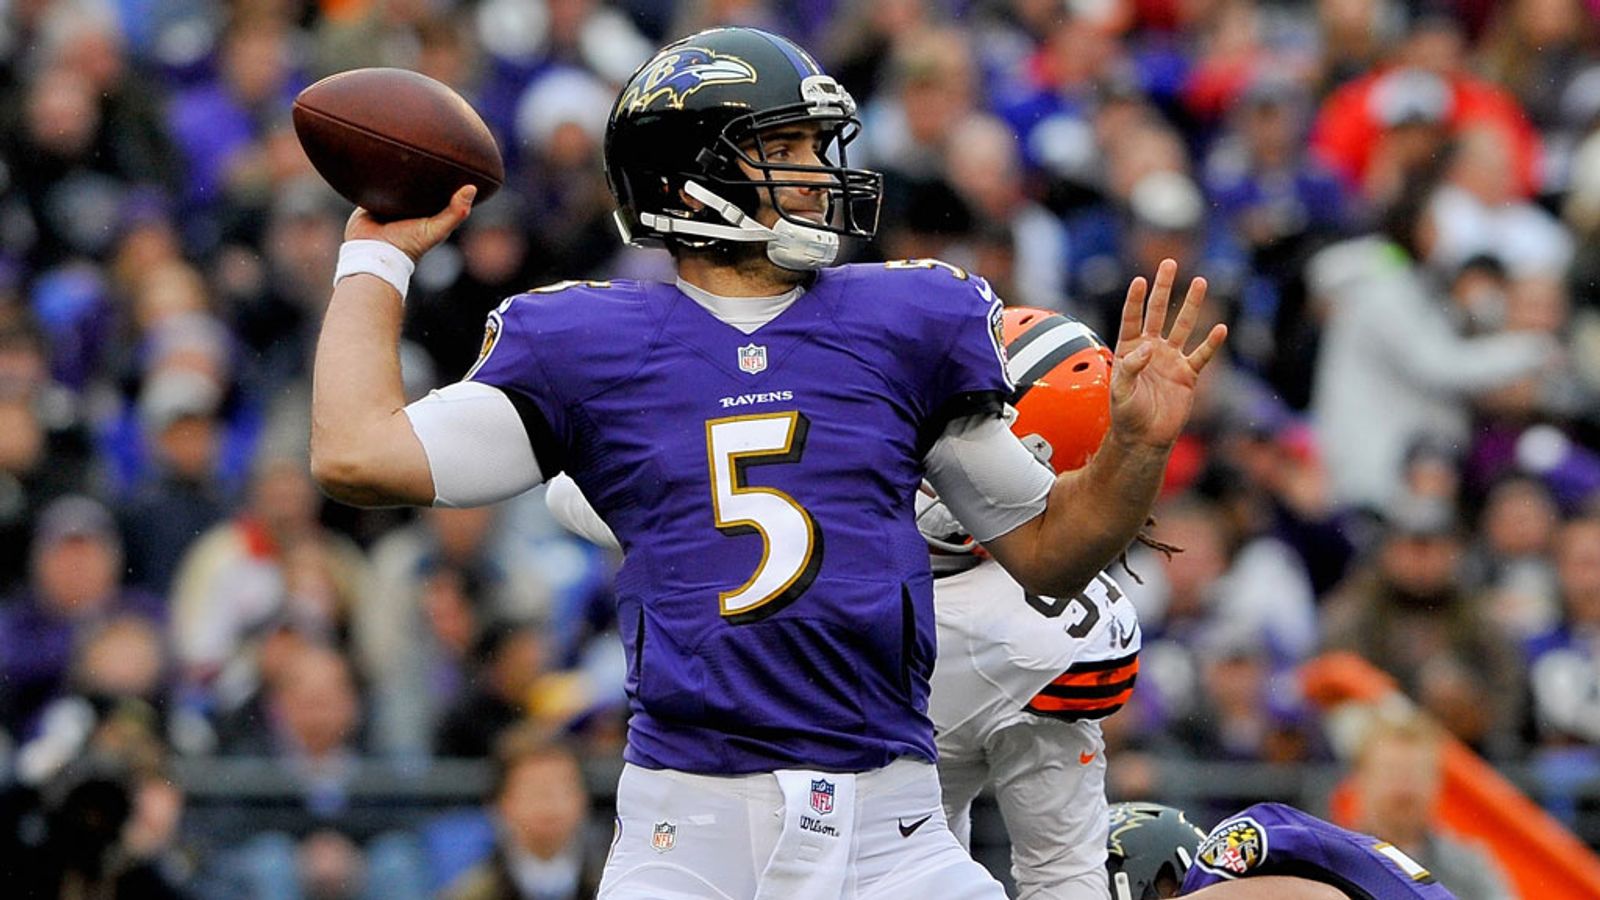 NFL: Baltimore Ravens claim AFC wild-card berth, NFL News